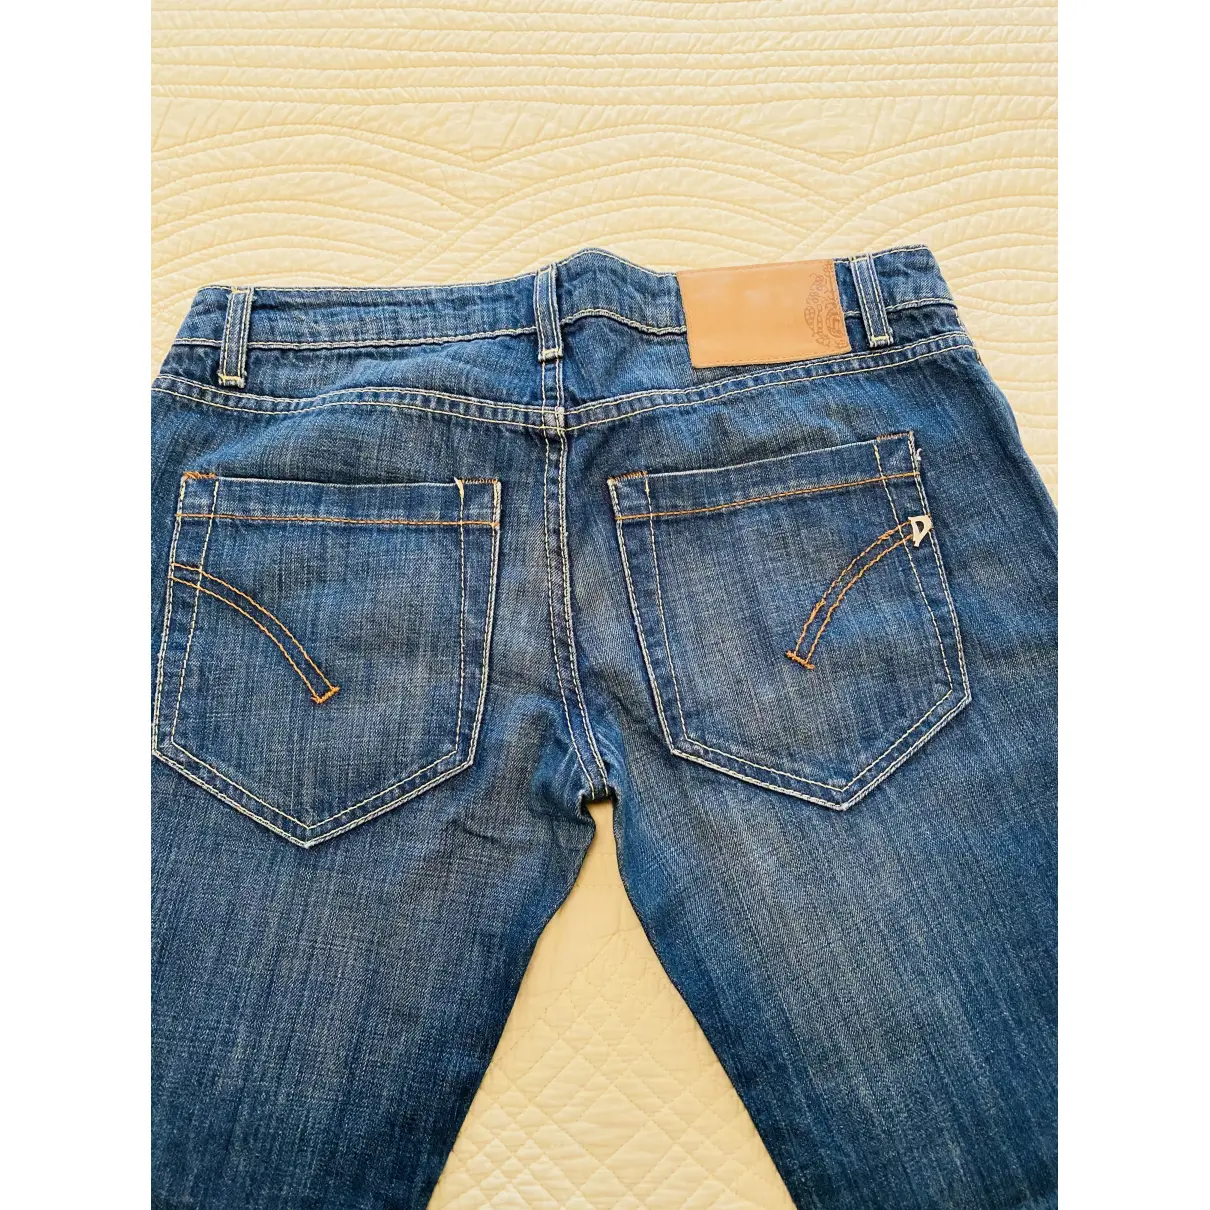 Buy Dondup Blue Cotton Jeans online